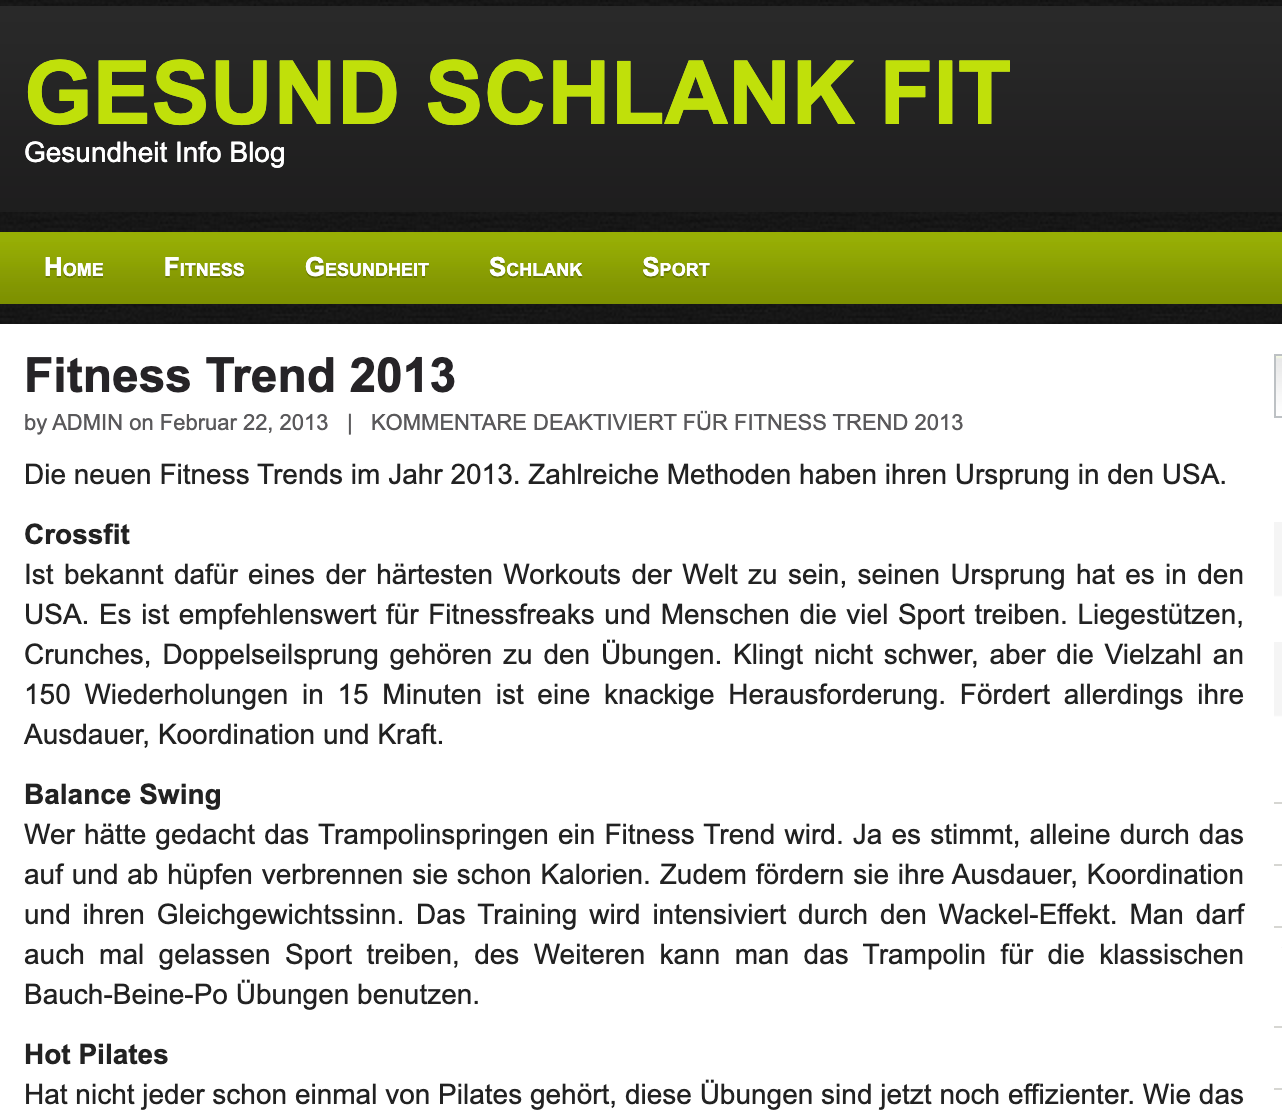 GESUND SCHLANK FIT, FEBRUARY 22, 2013: Fitness Trend 2013